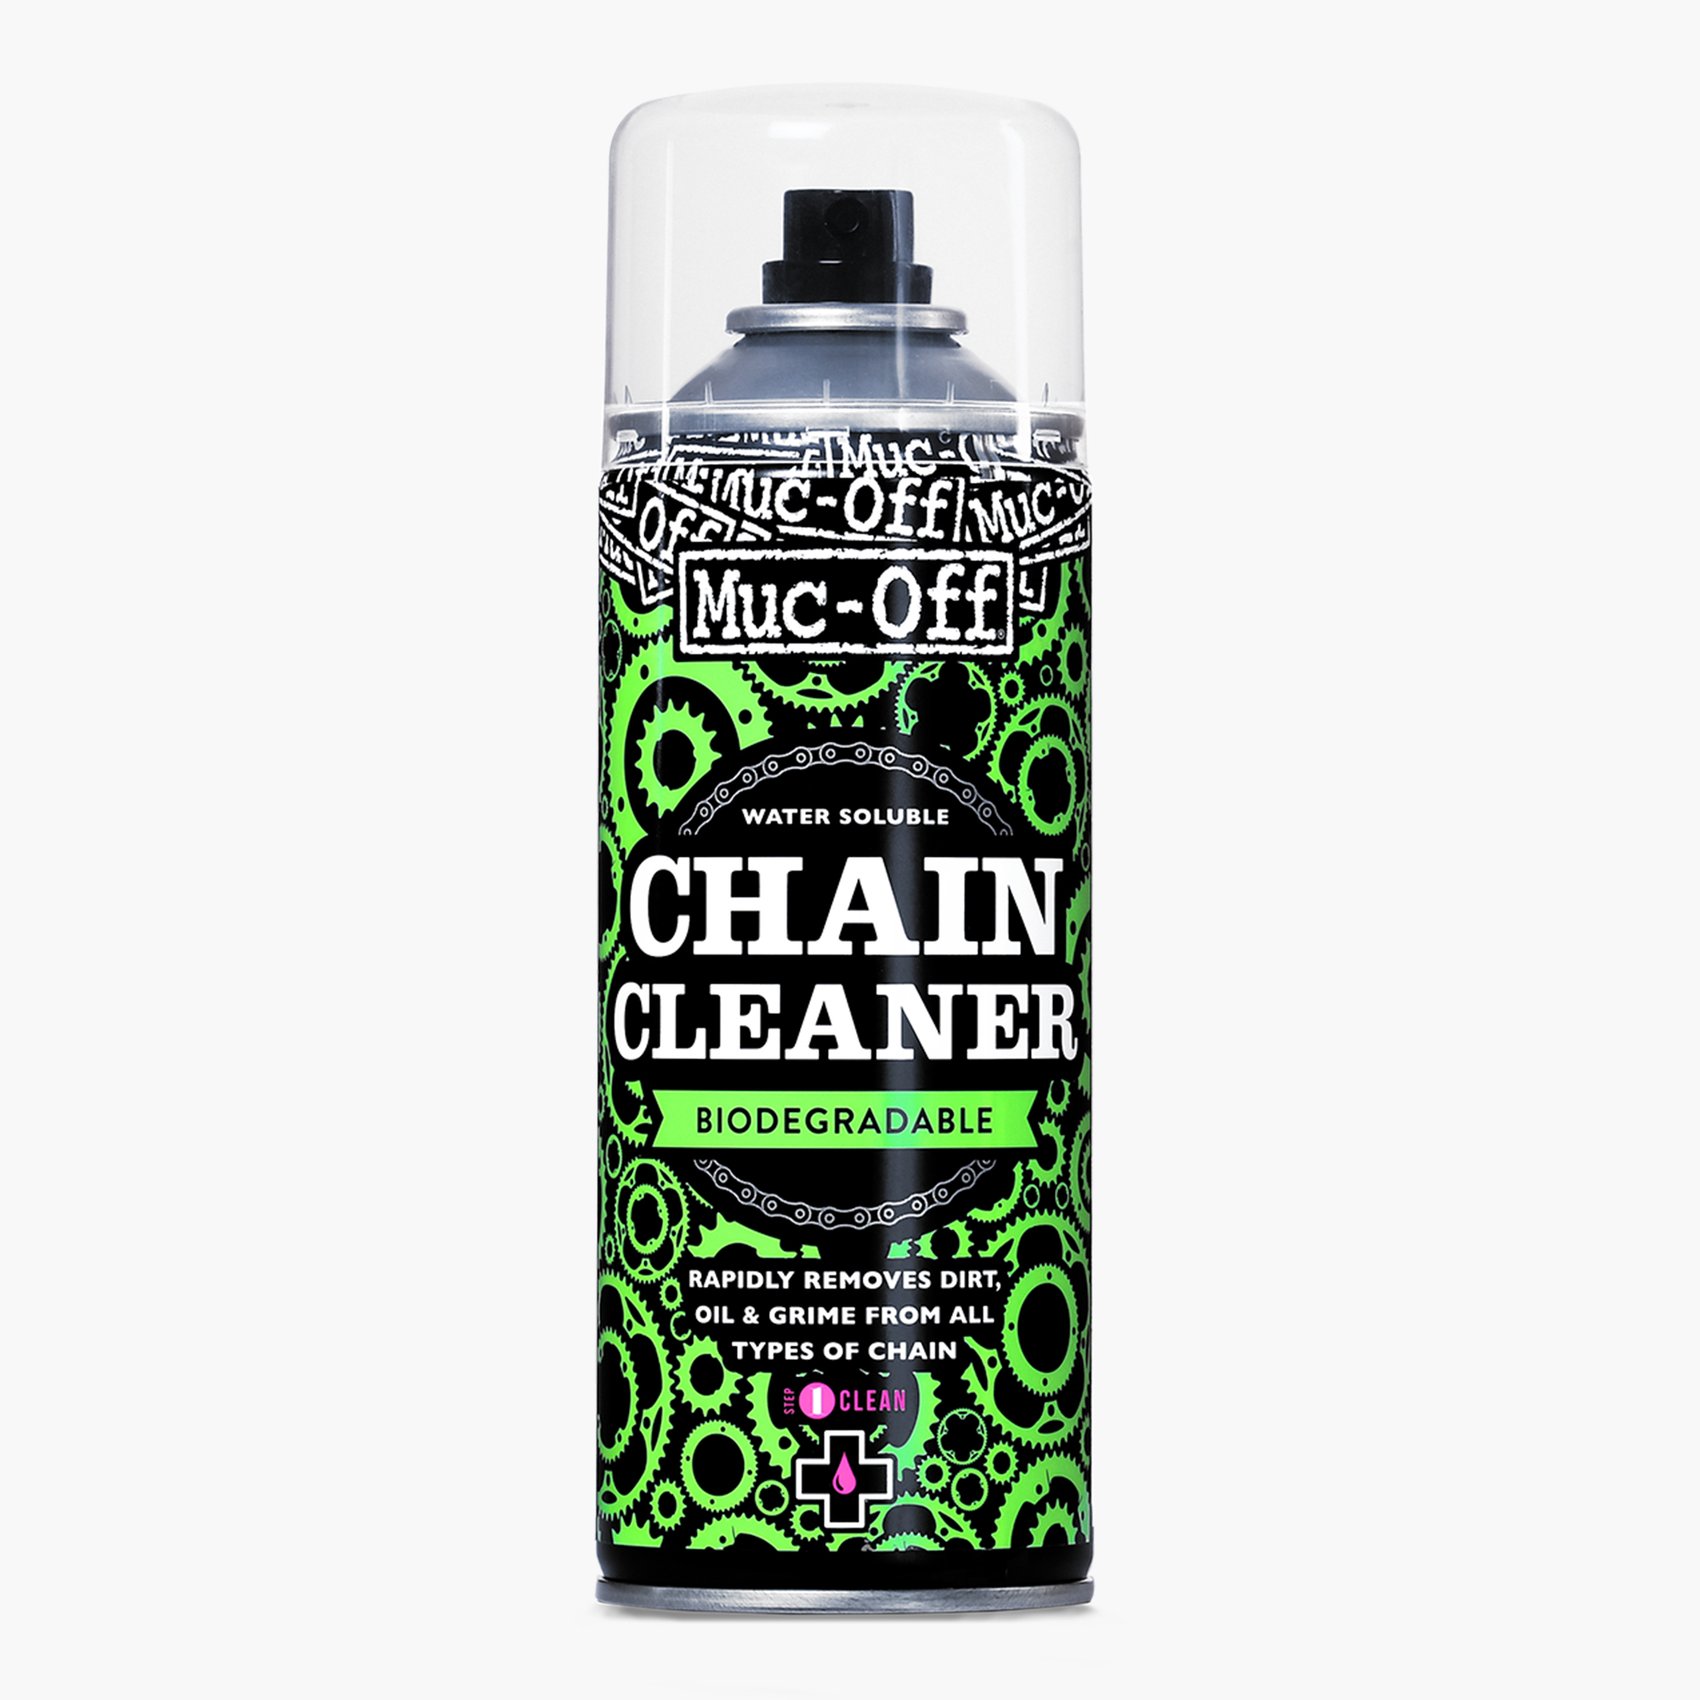 Muc-Off Chain Cleaner Bio